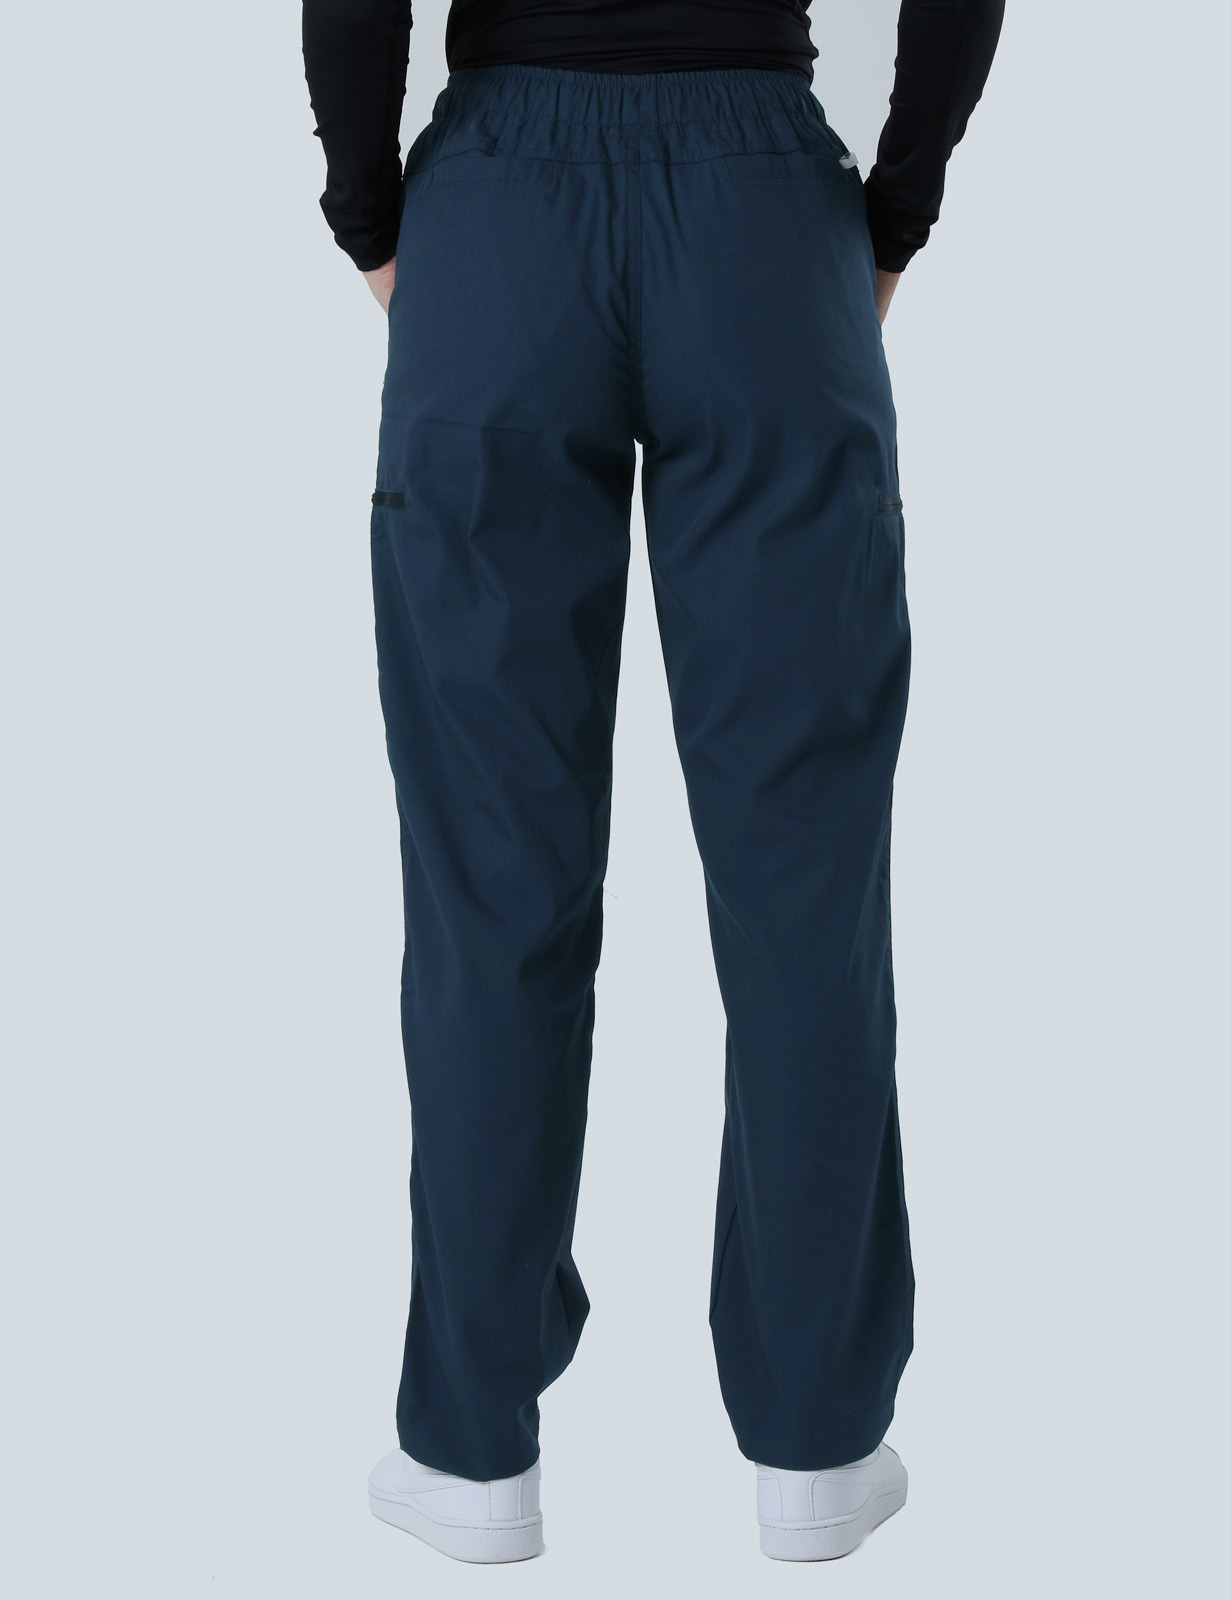 Women's Utility Pants - Navy - X Small - Tall - 3